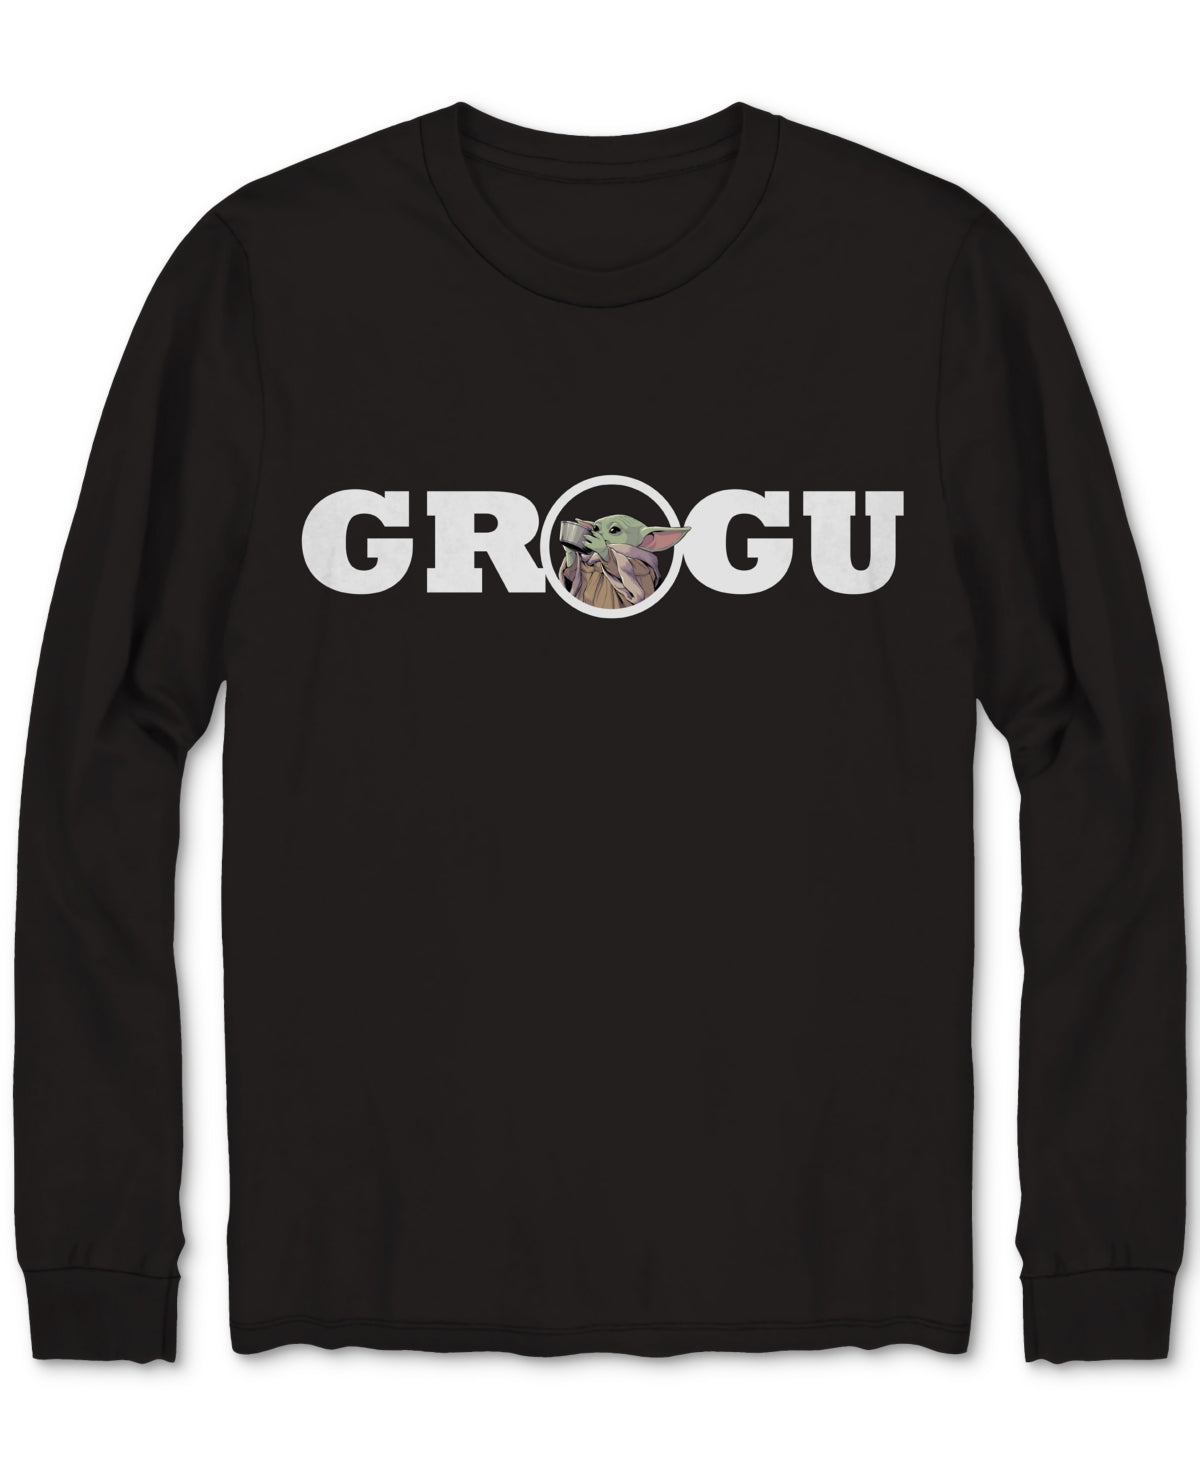 Hybrid Apparel Adult Unisex Grogu Long-Sleeve T-Shirt, Created for Macy's - Small